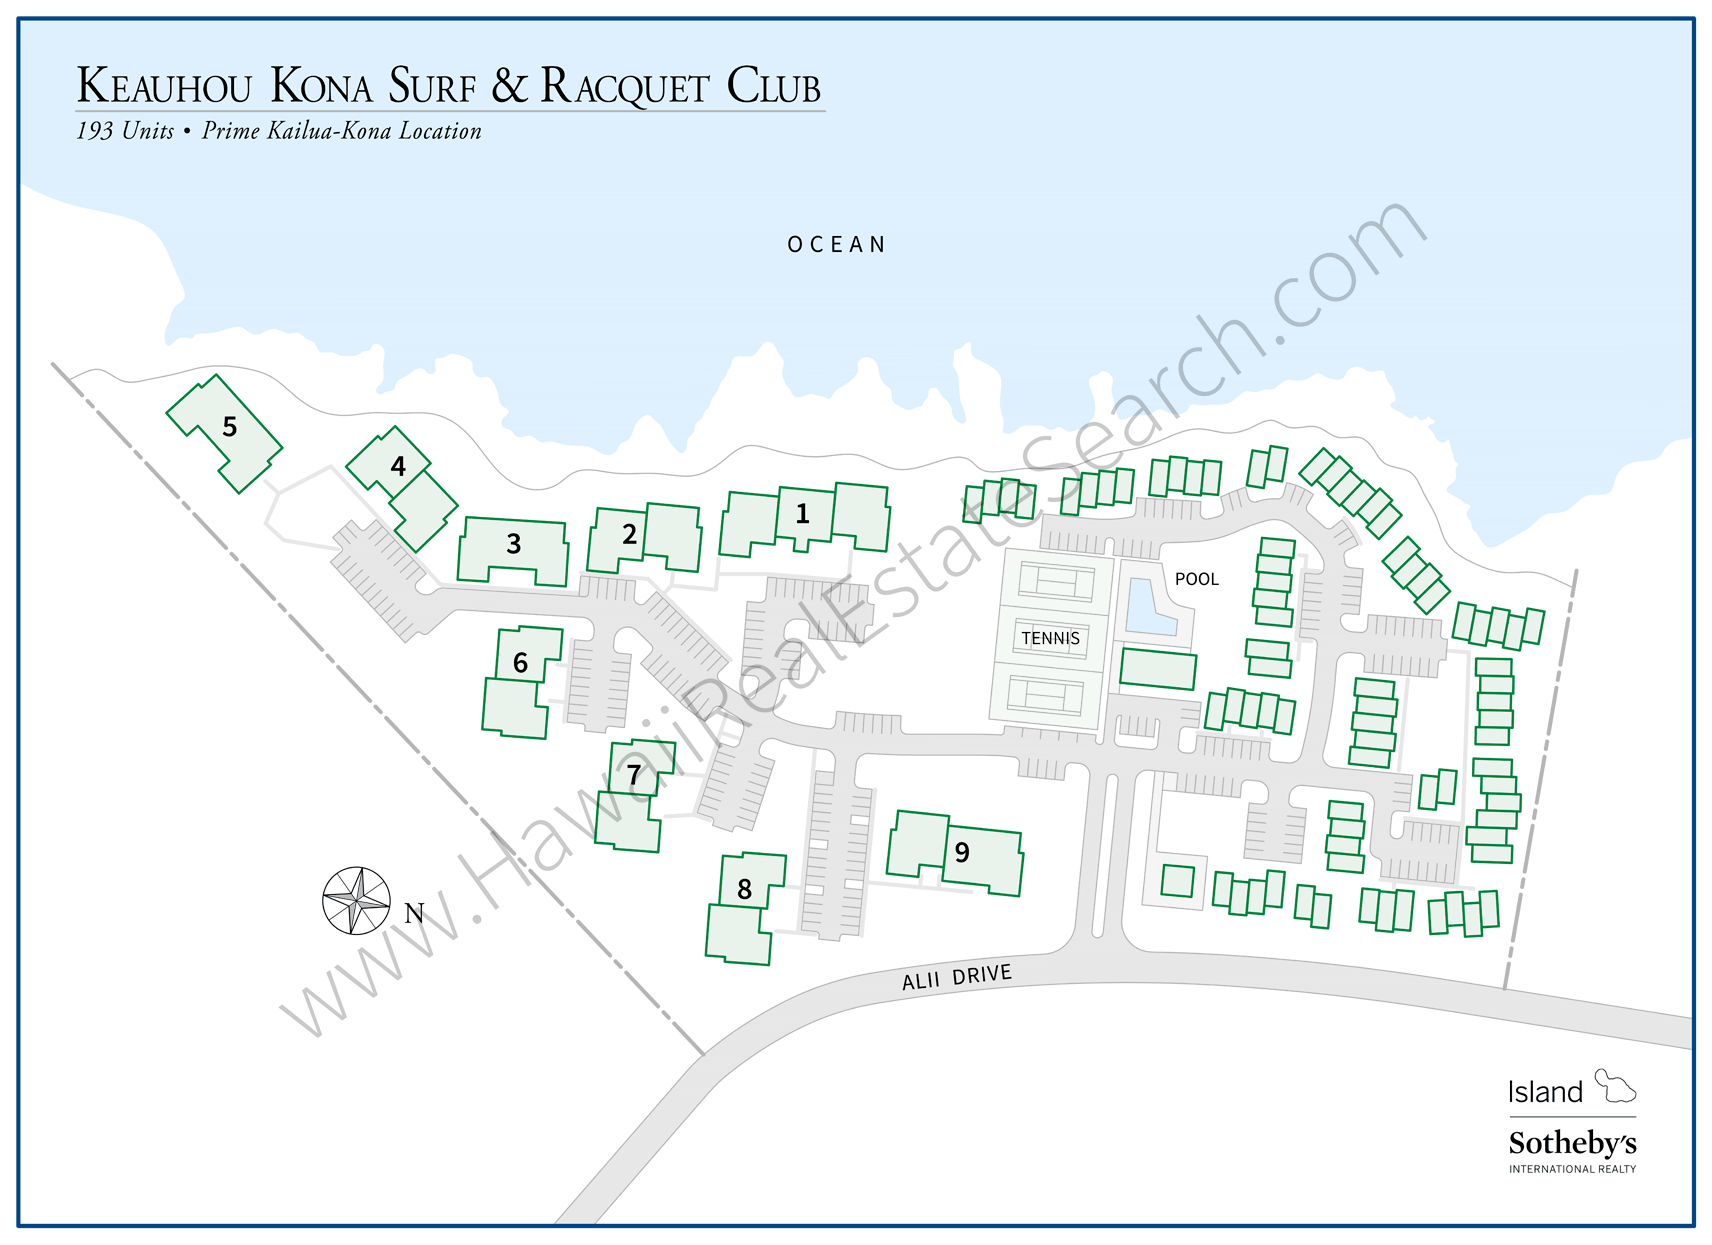 Keauhou Kona Surf & Racquet Club Map